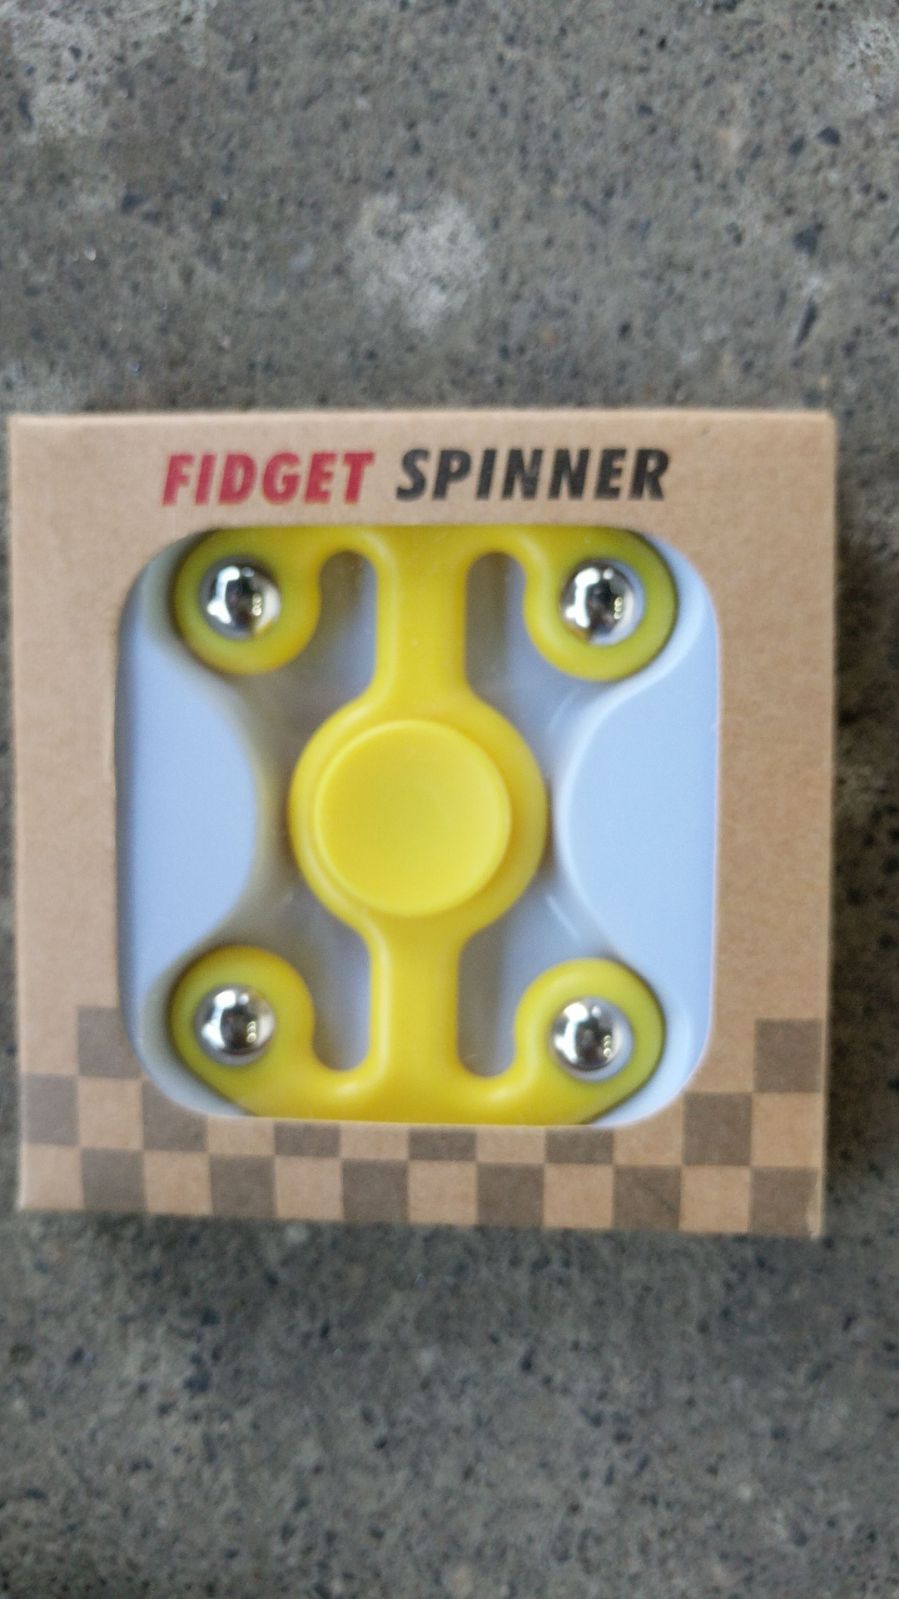 4 Sided Fidgit Fidget Spinner, Yellow